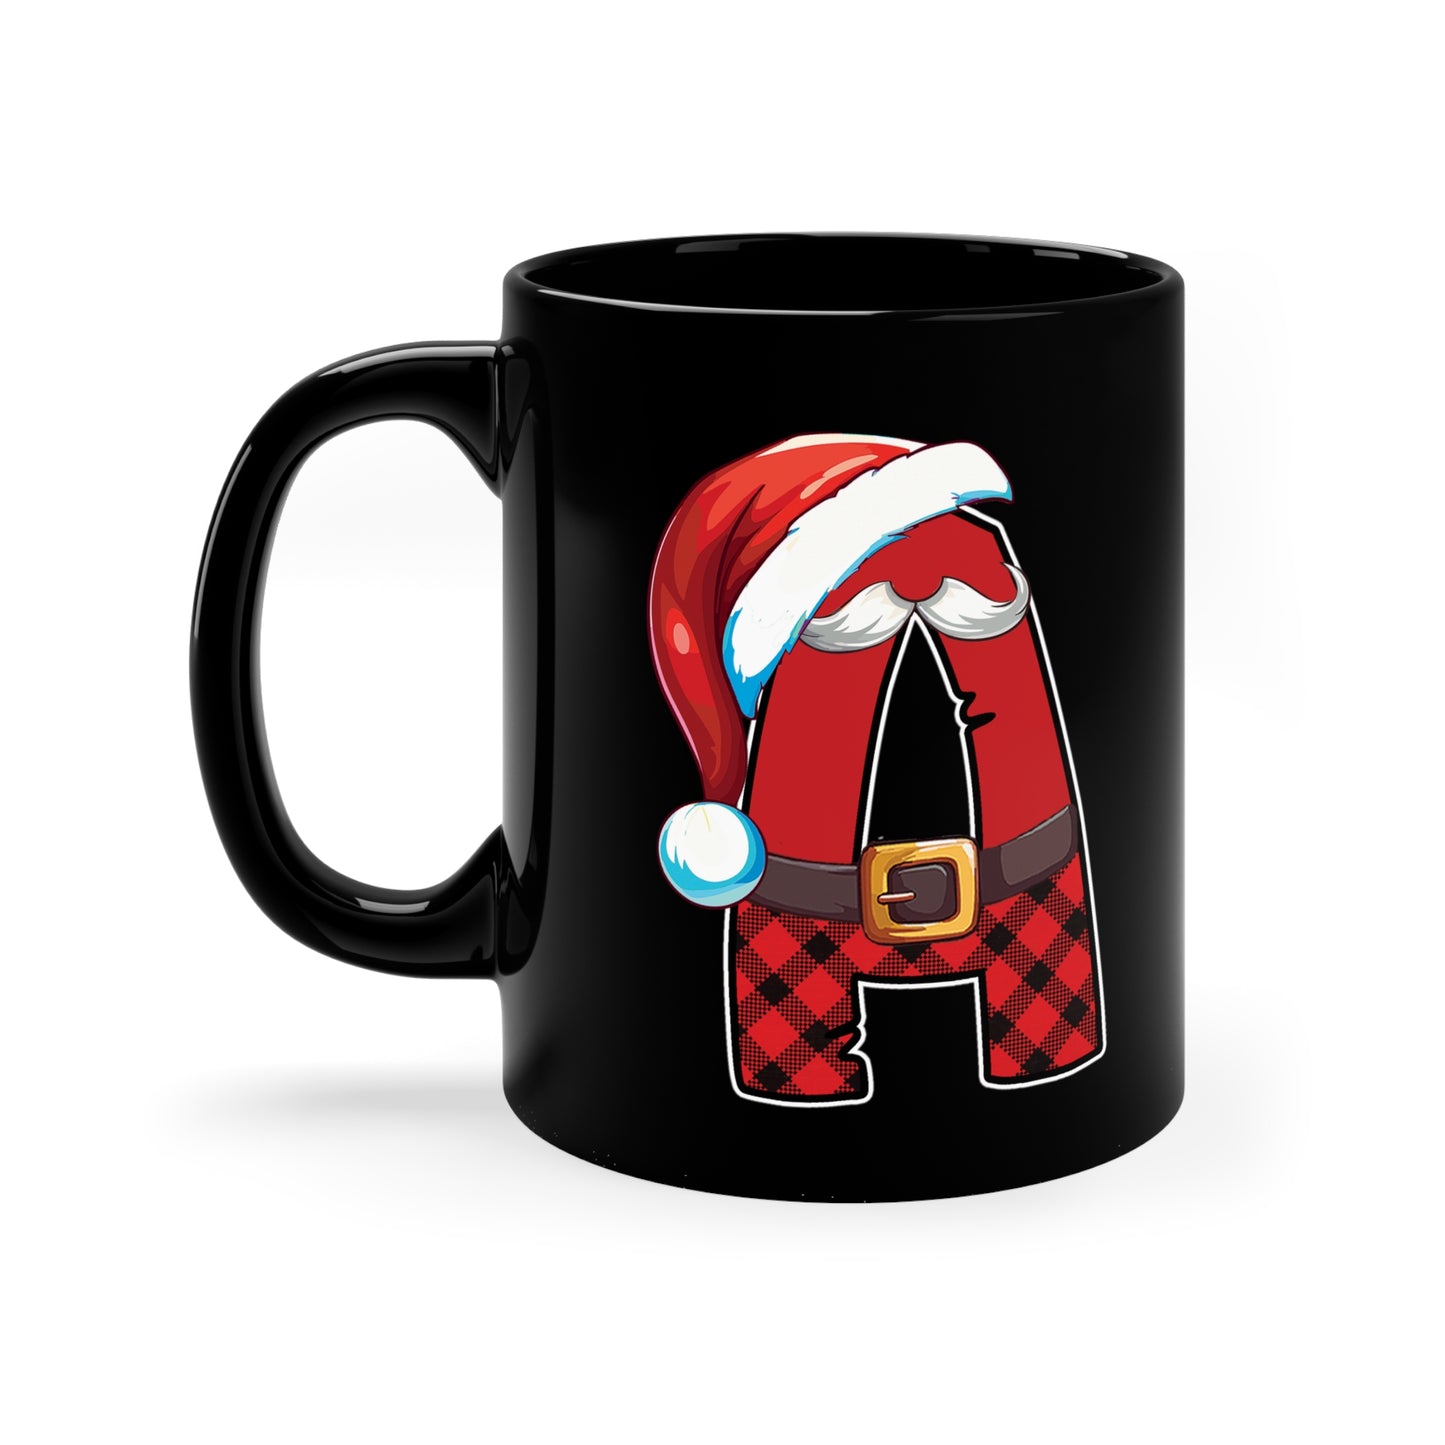 A Santa Initial 11oz Black Mug